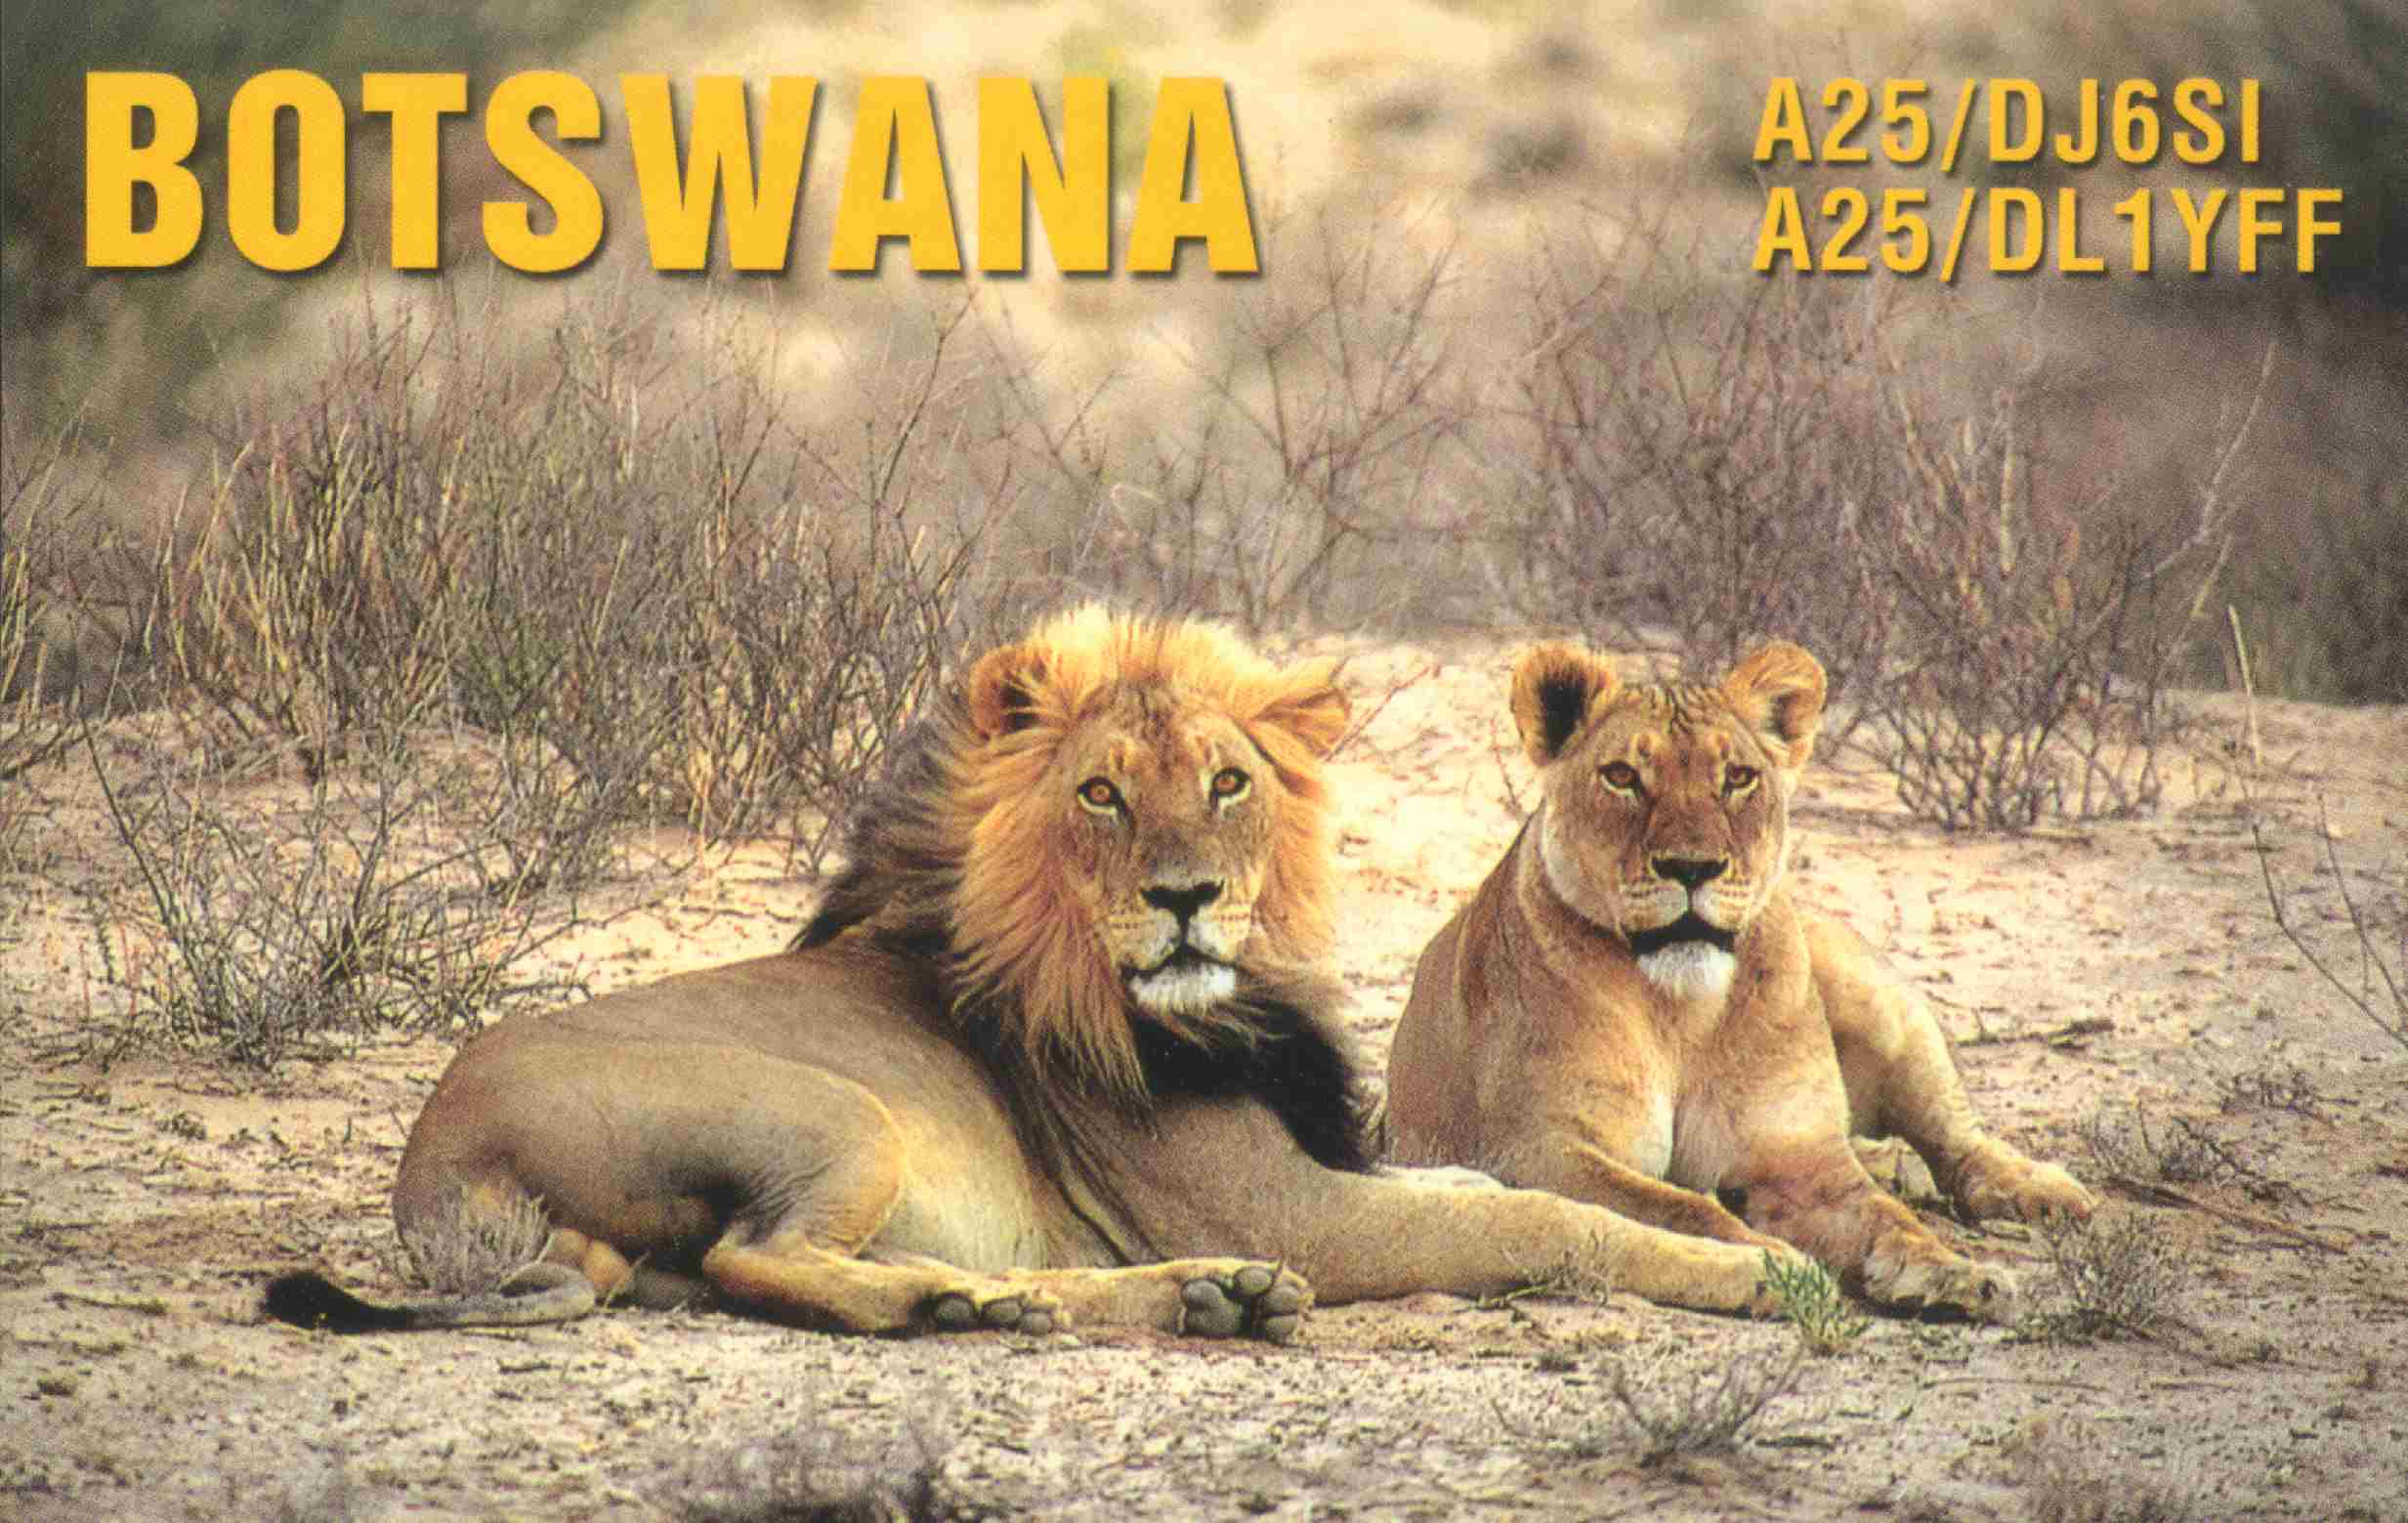 In Botswana 2002.jpg - 156798 Bytes